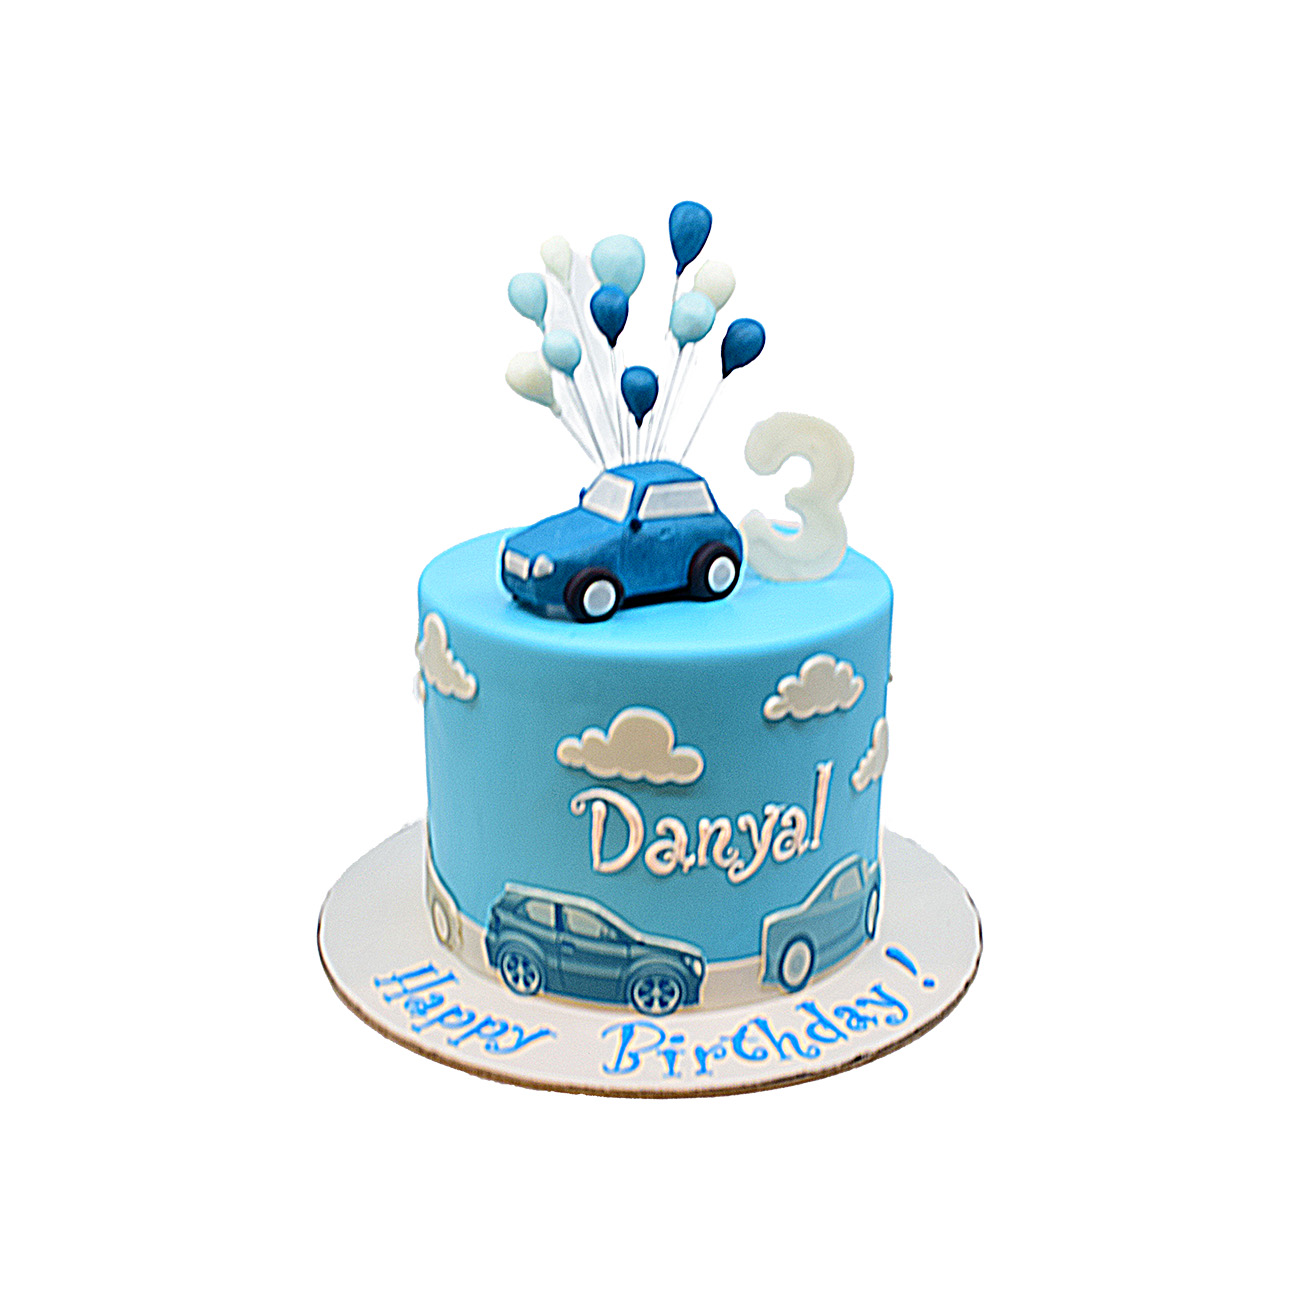 CAR BIRTHDAY CAKE | THE CRVAERY CAKES